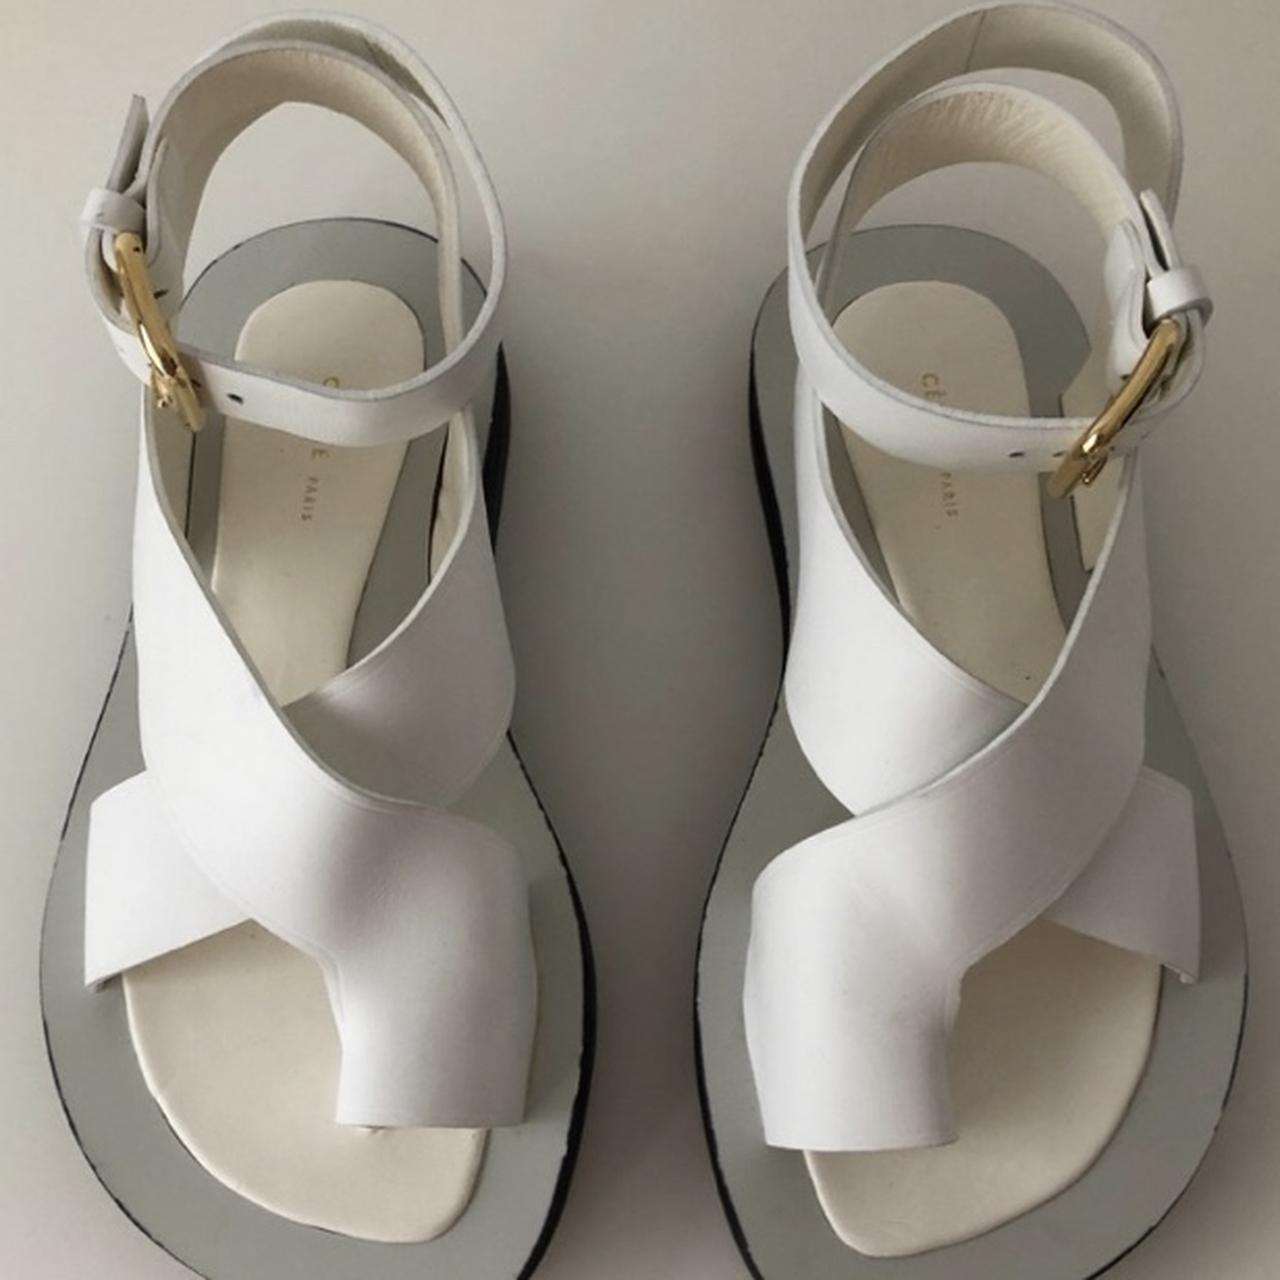 Old Céline sandals, by Phoebe Philo. In good... - Depop